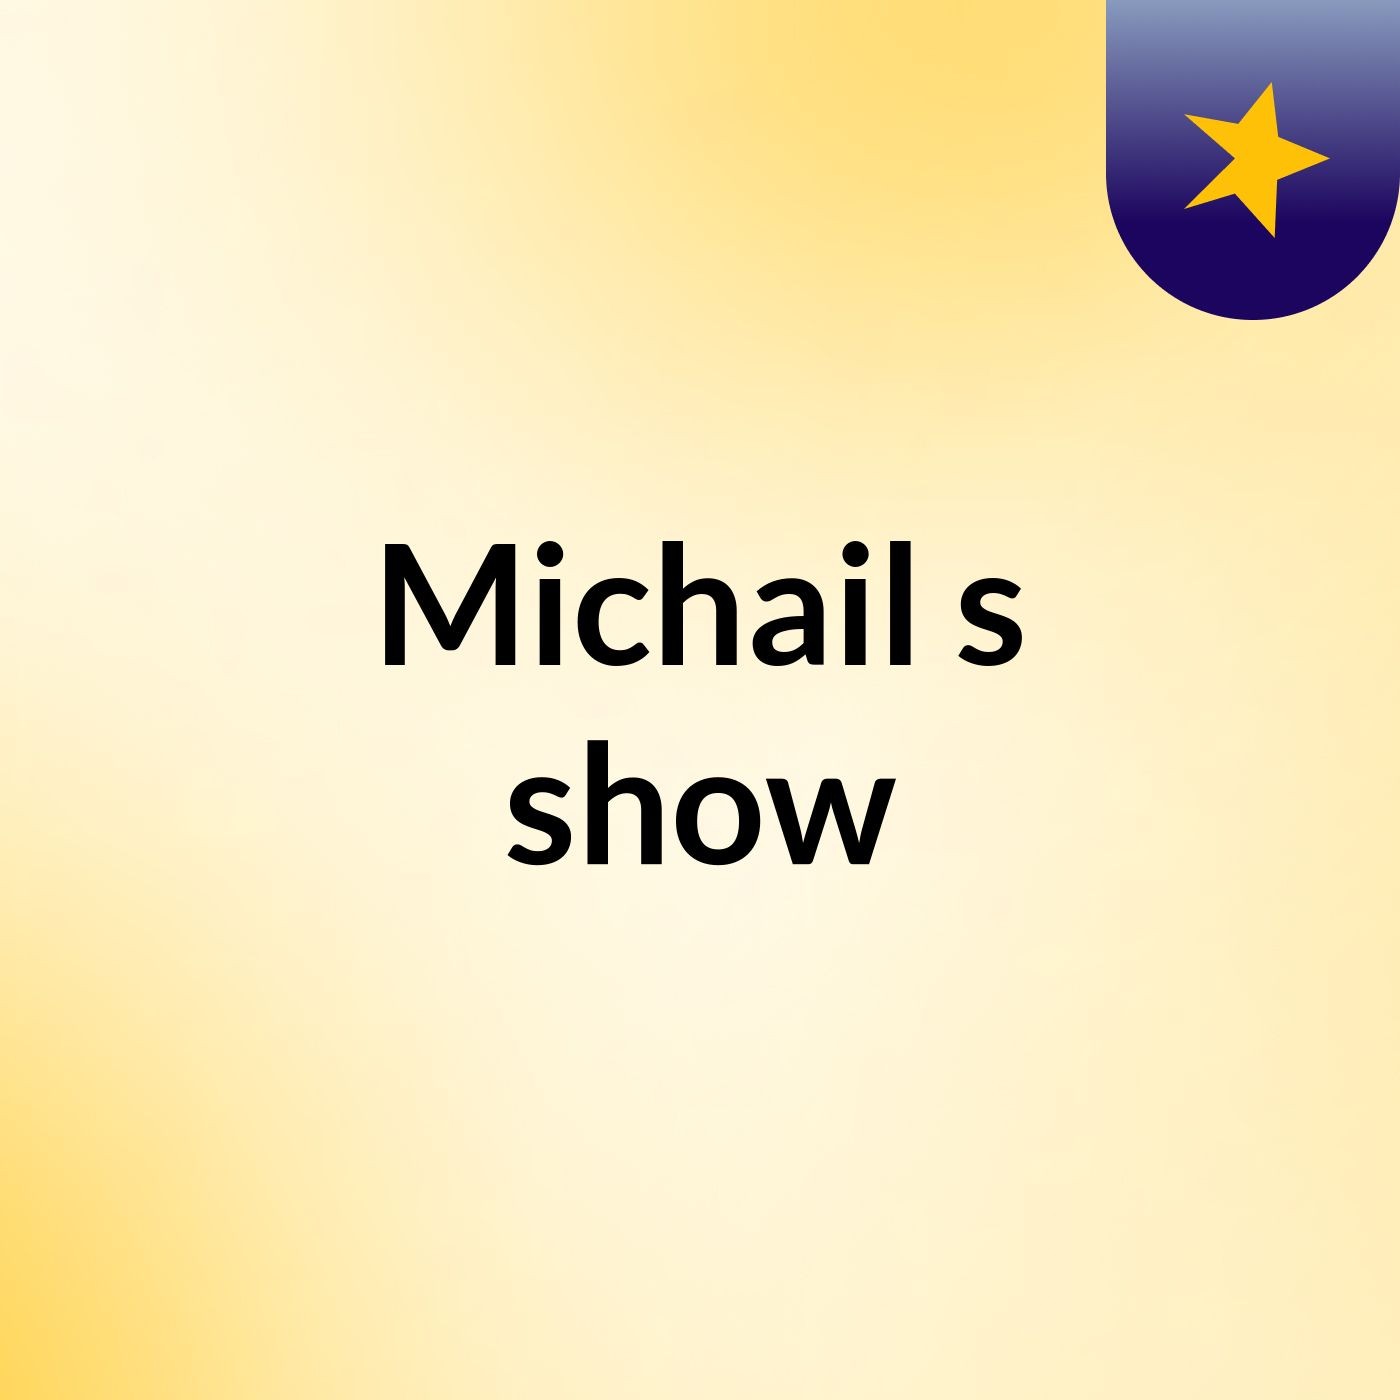 Michail's show